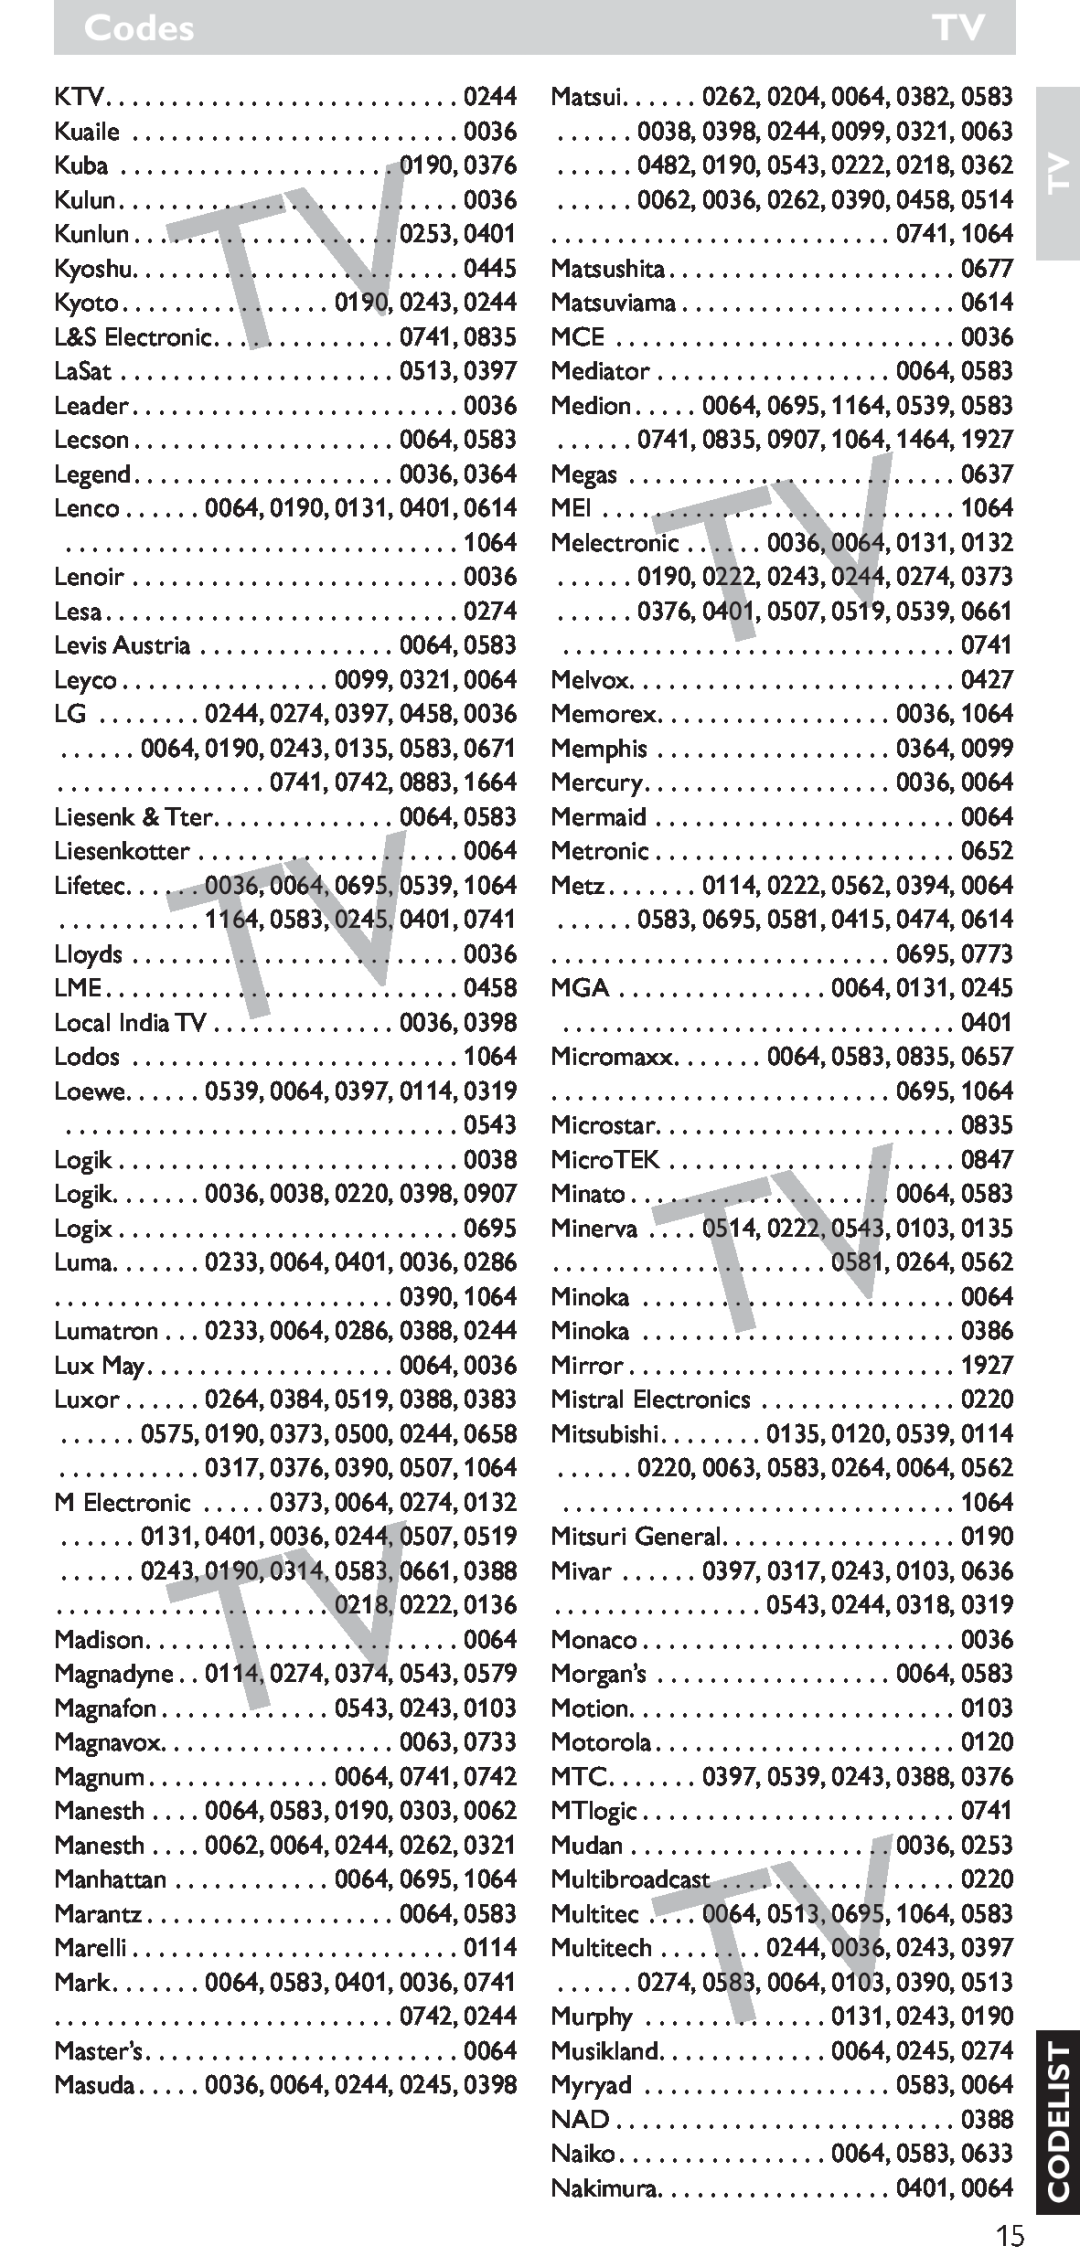 Hitachi SRU 5040/05 manual Codes, Tv Codelist, Local IndiaTVTV . . . . . . . . . . . . . . 0036 